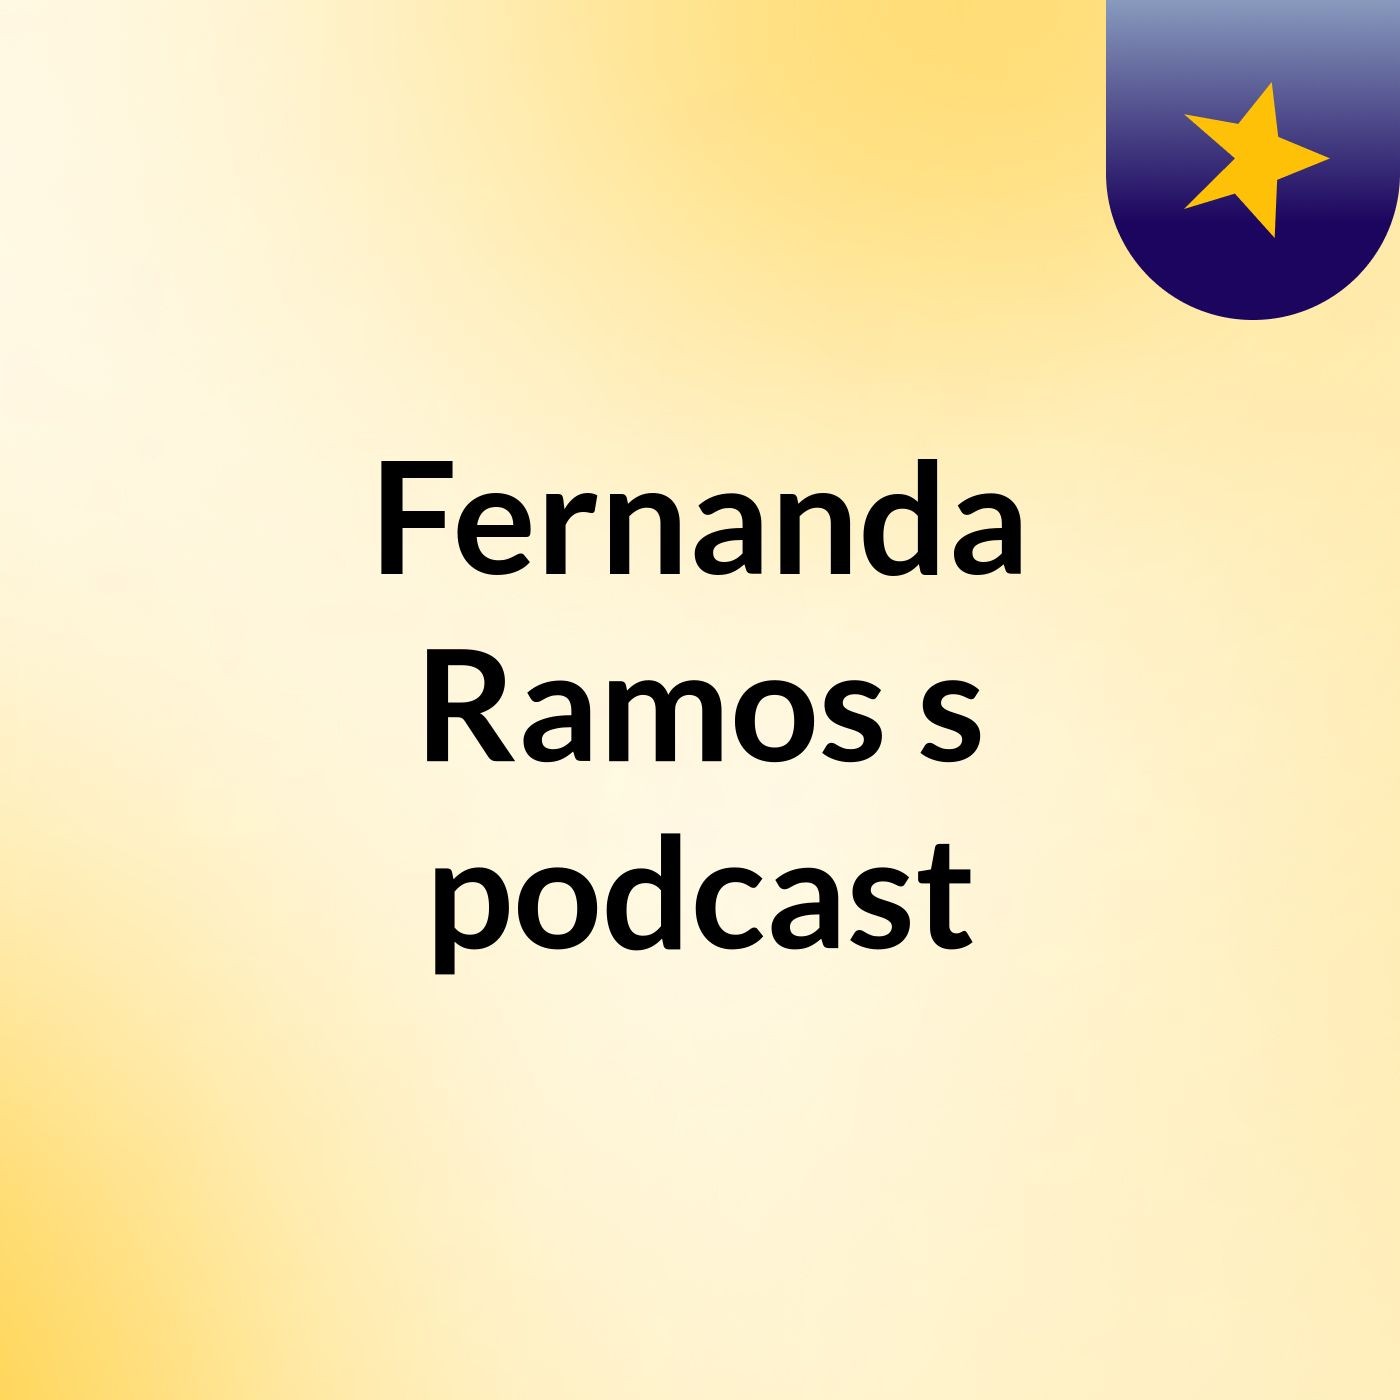 Fernanda Ramos's podcast